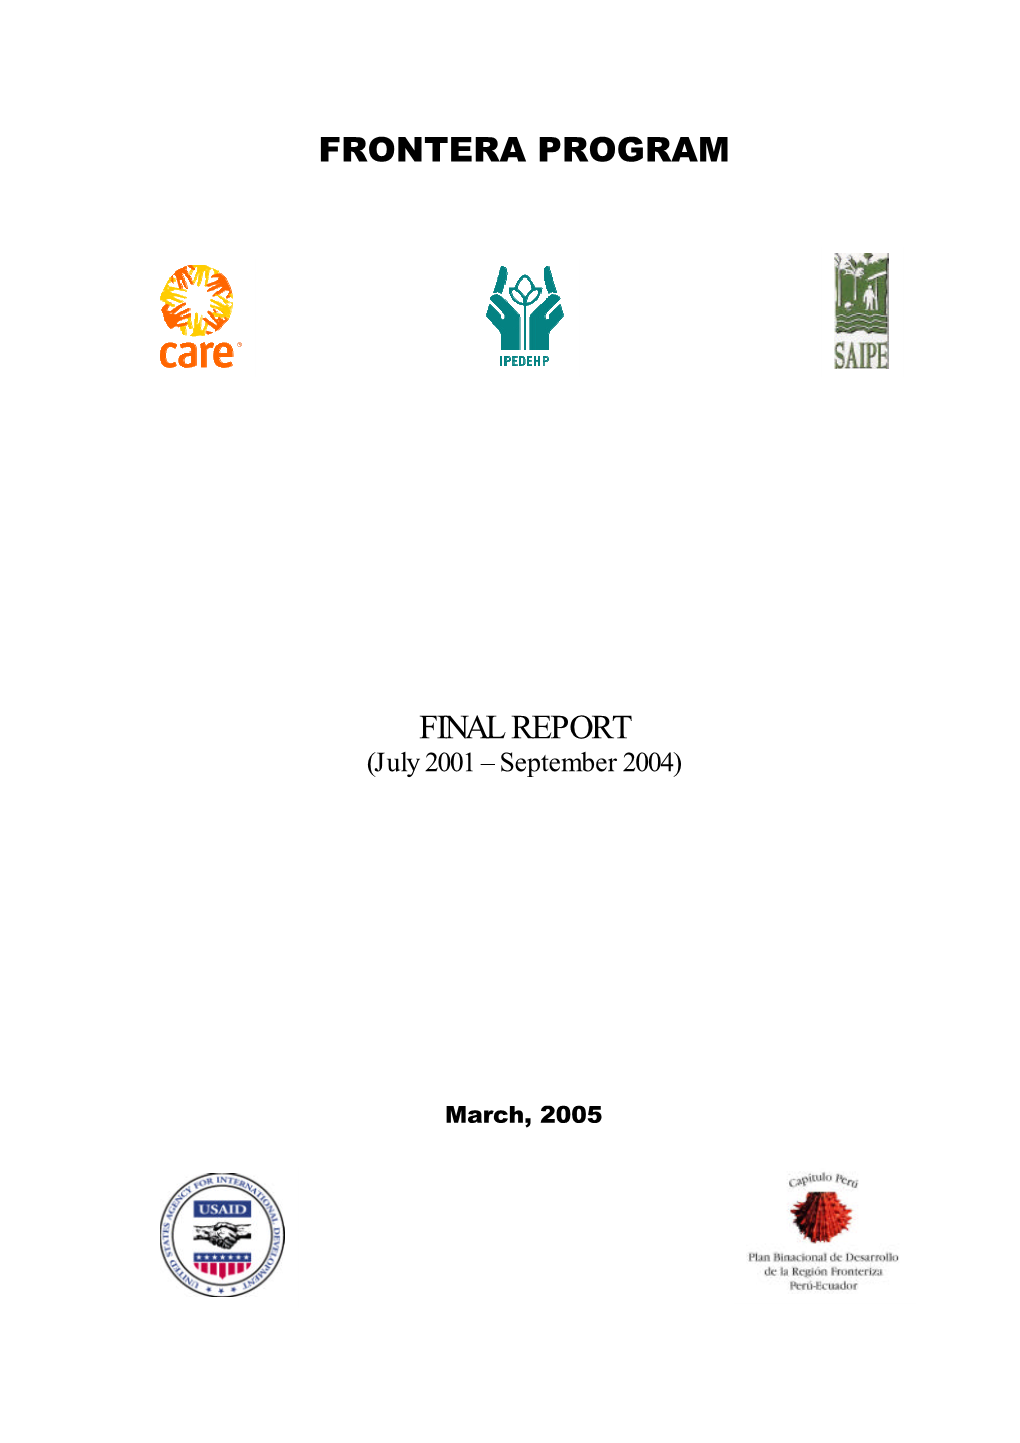 Frontera Program Final Report